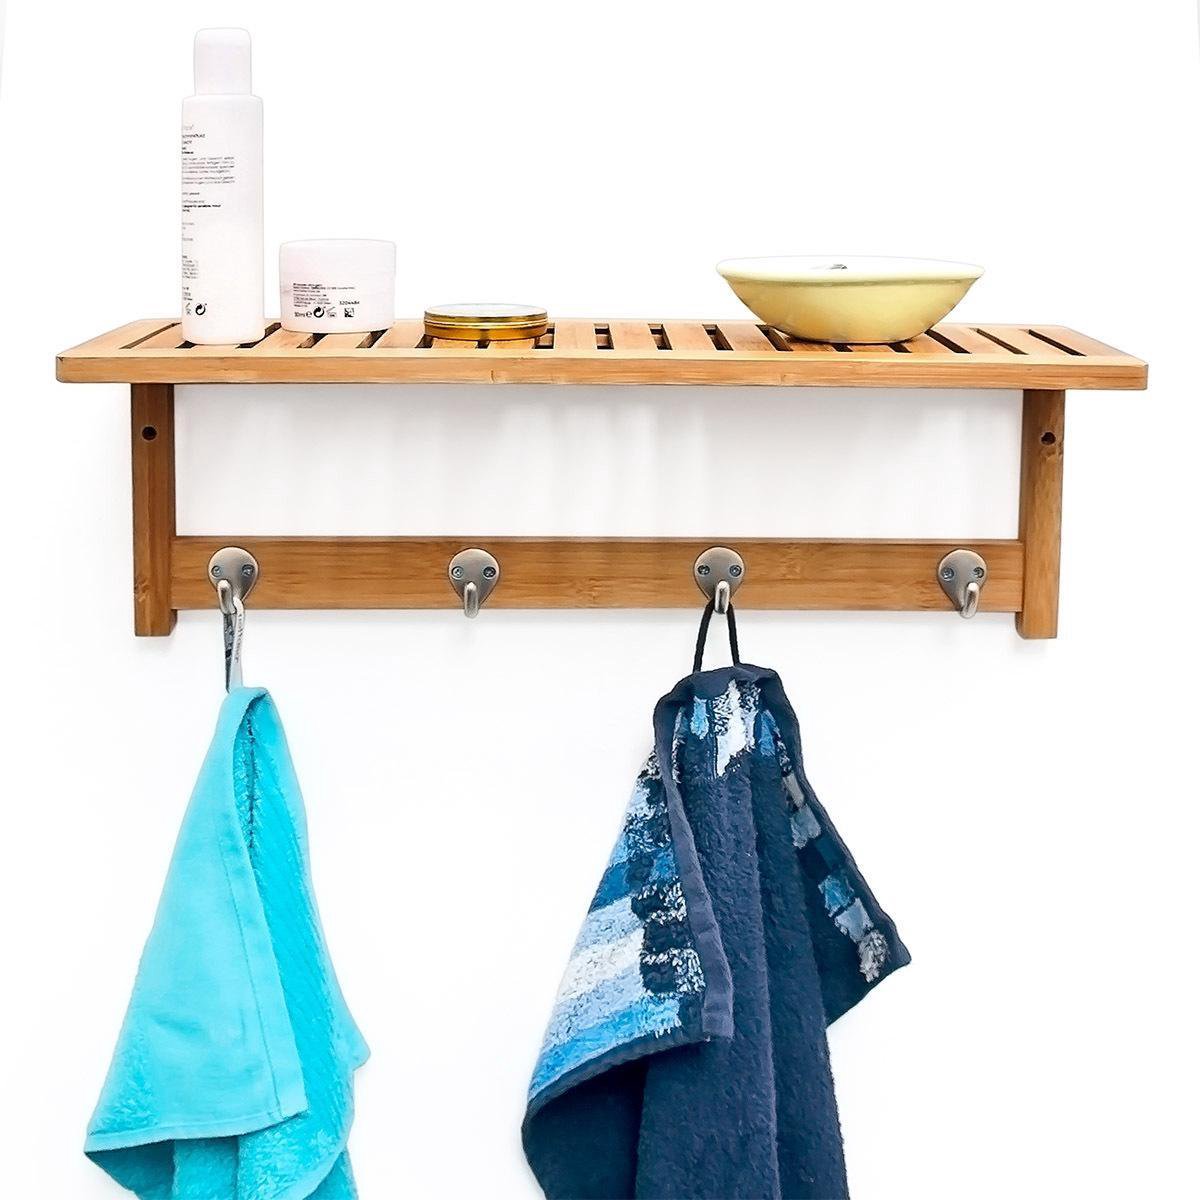 vrede terugtrekken Acht Relaxdays Handdoekenrek - plank keuken / badkamer - kapstok bamboe hout -  50 x 18 x 16 cm | bol.com